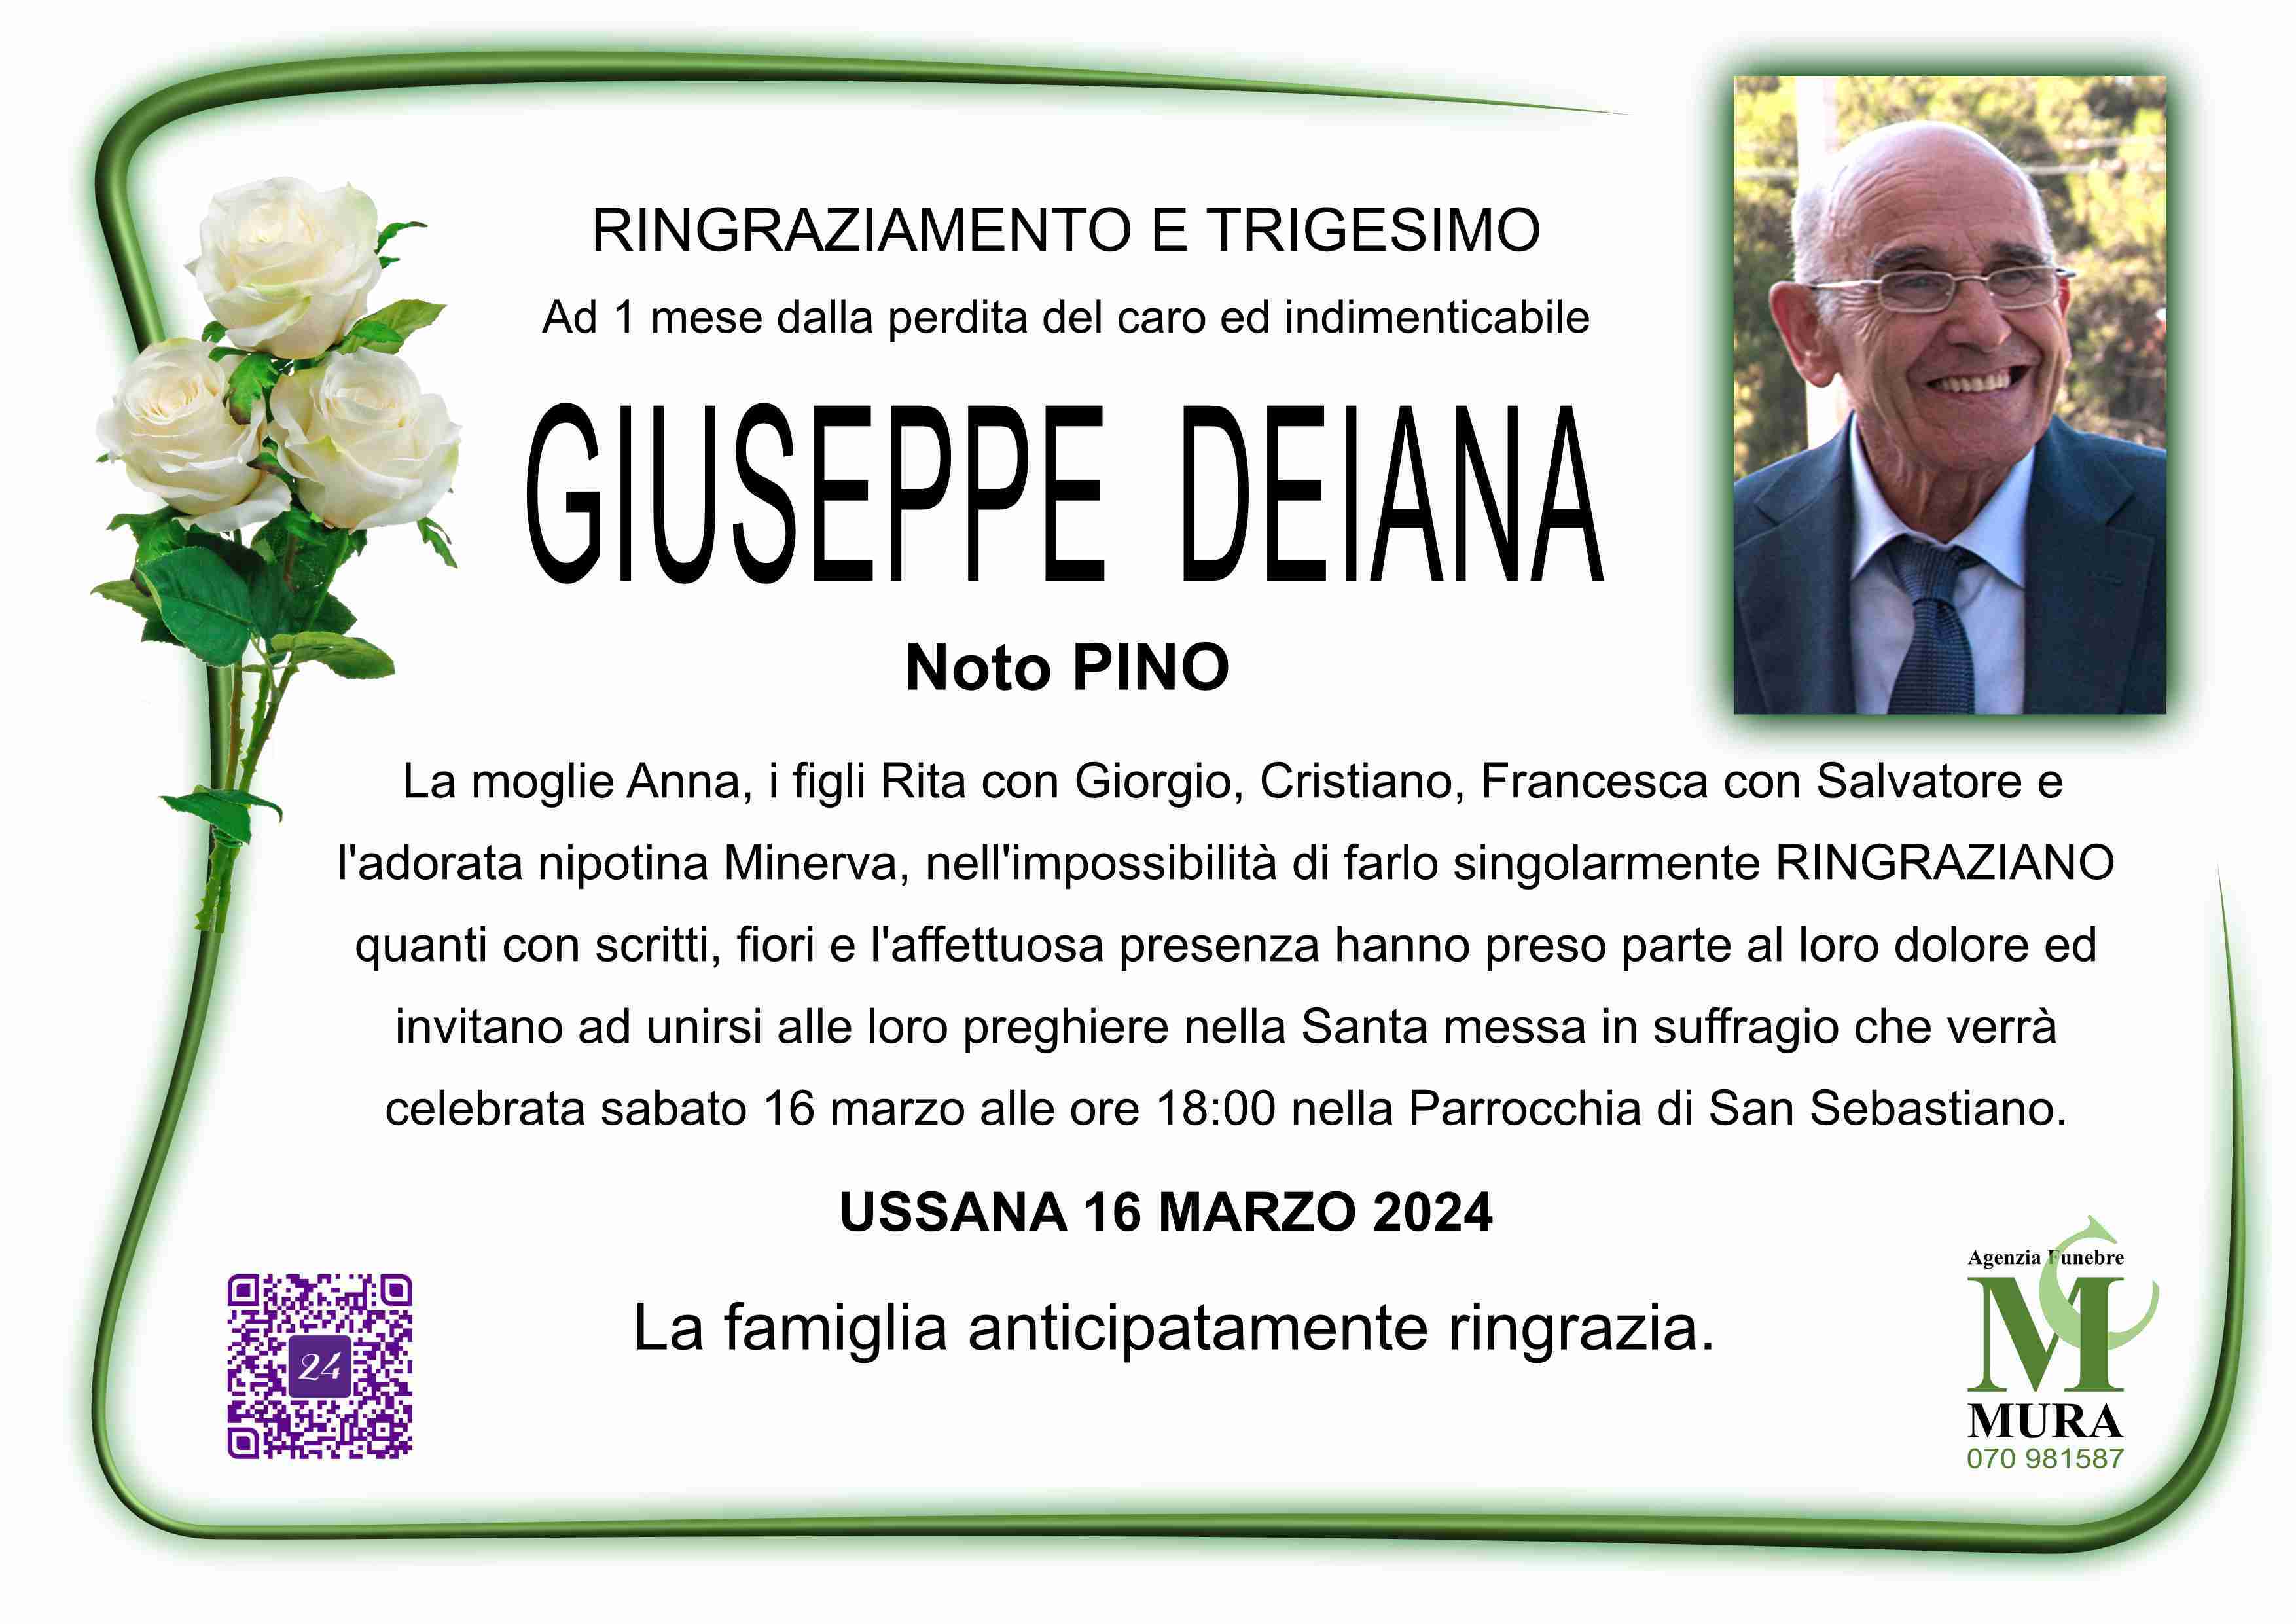 Giuseppe Deiana